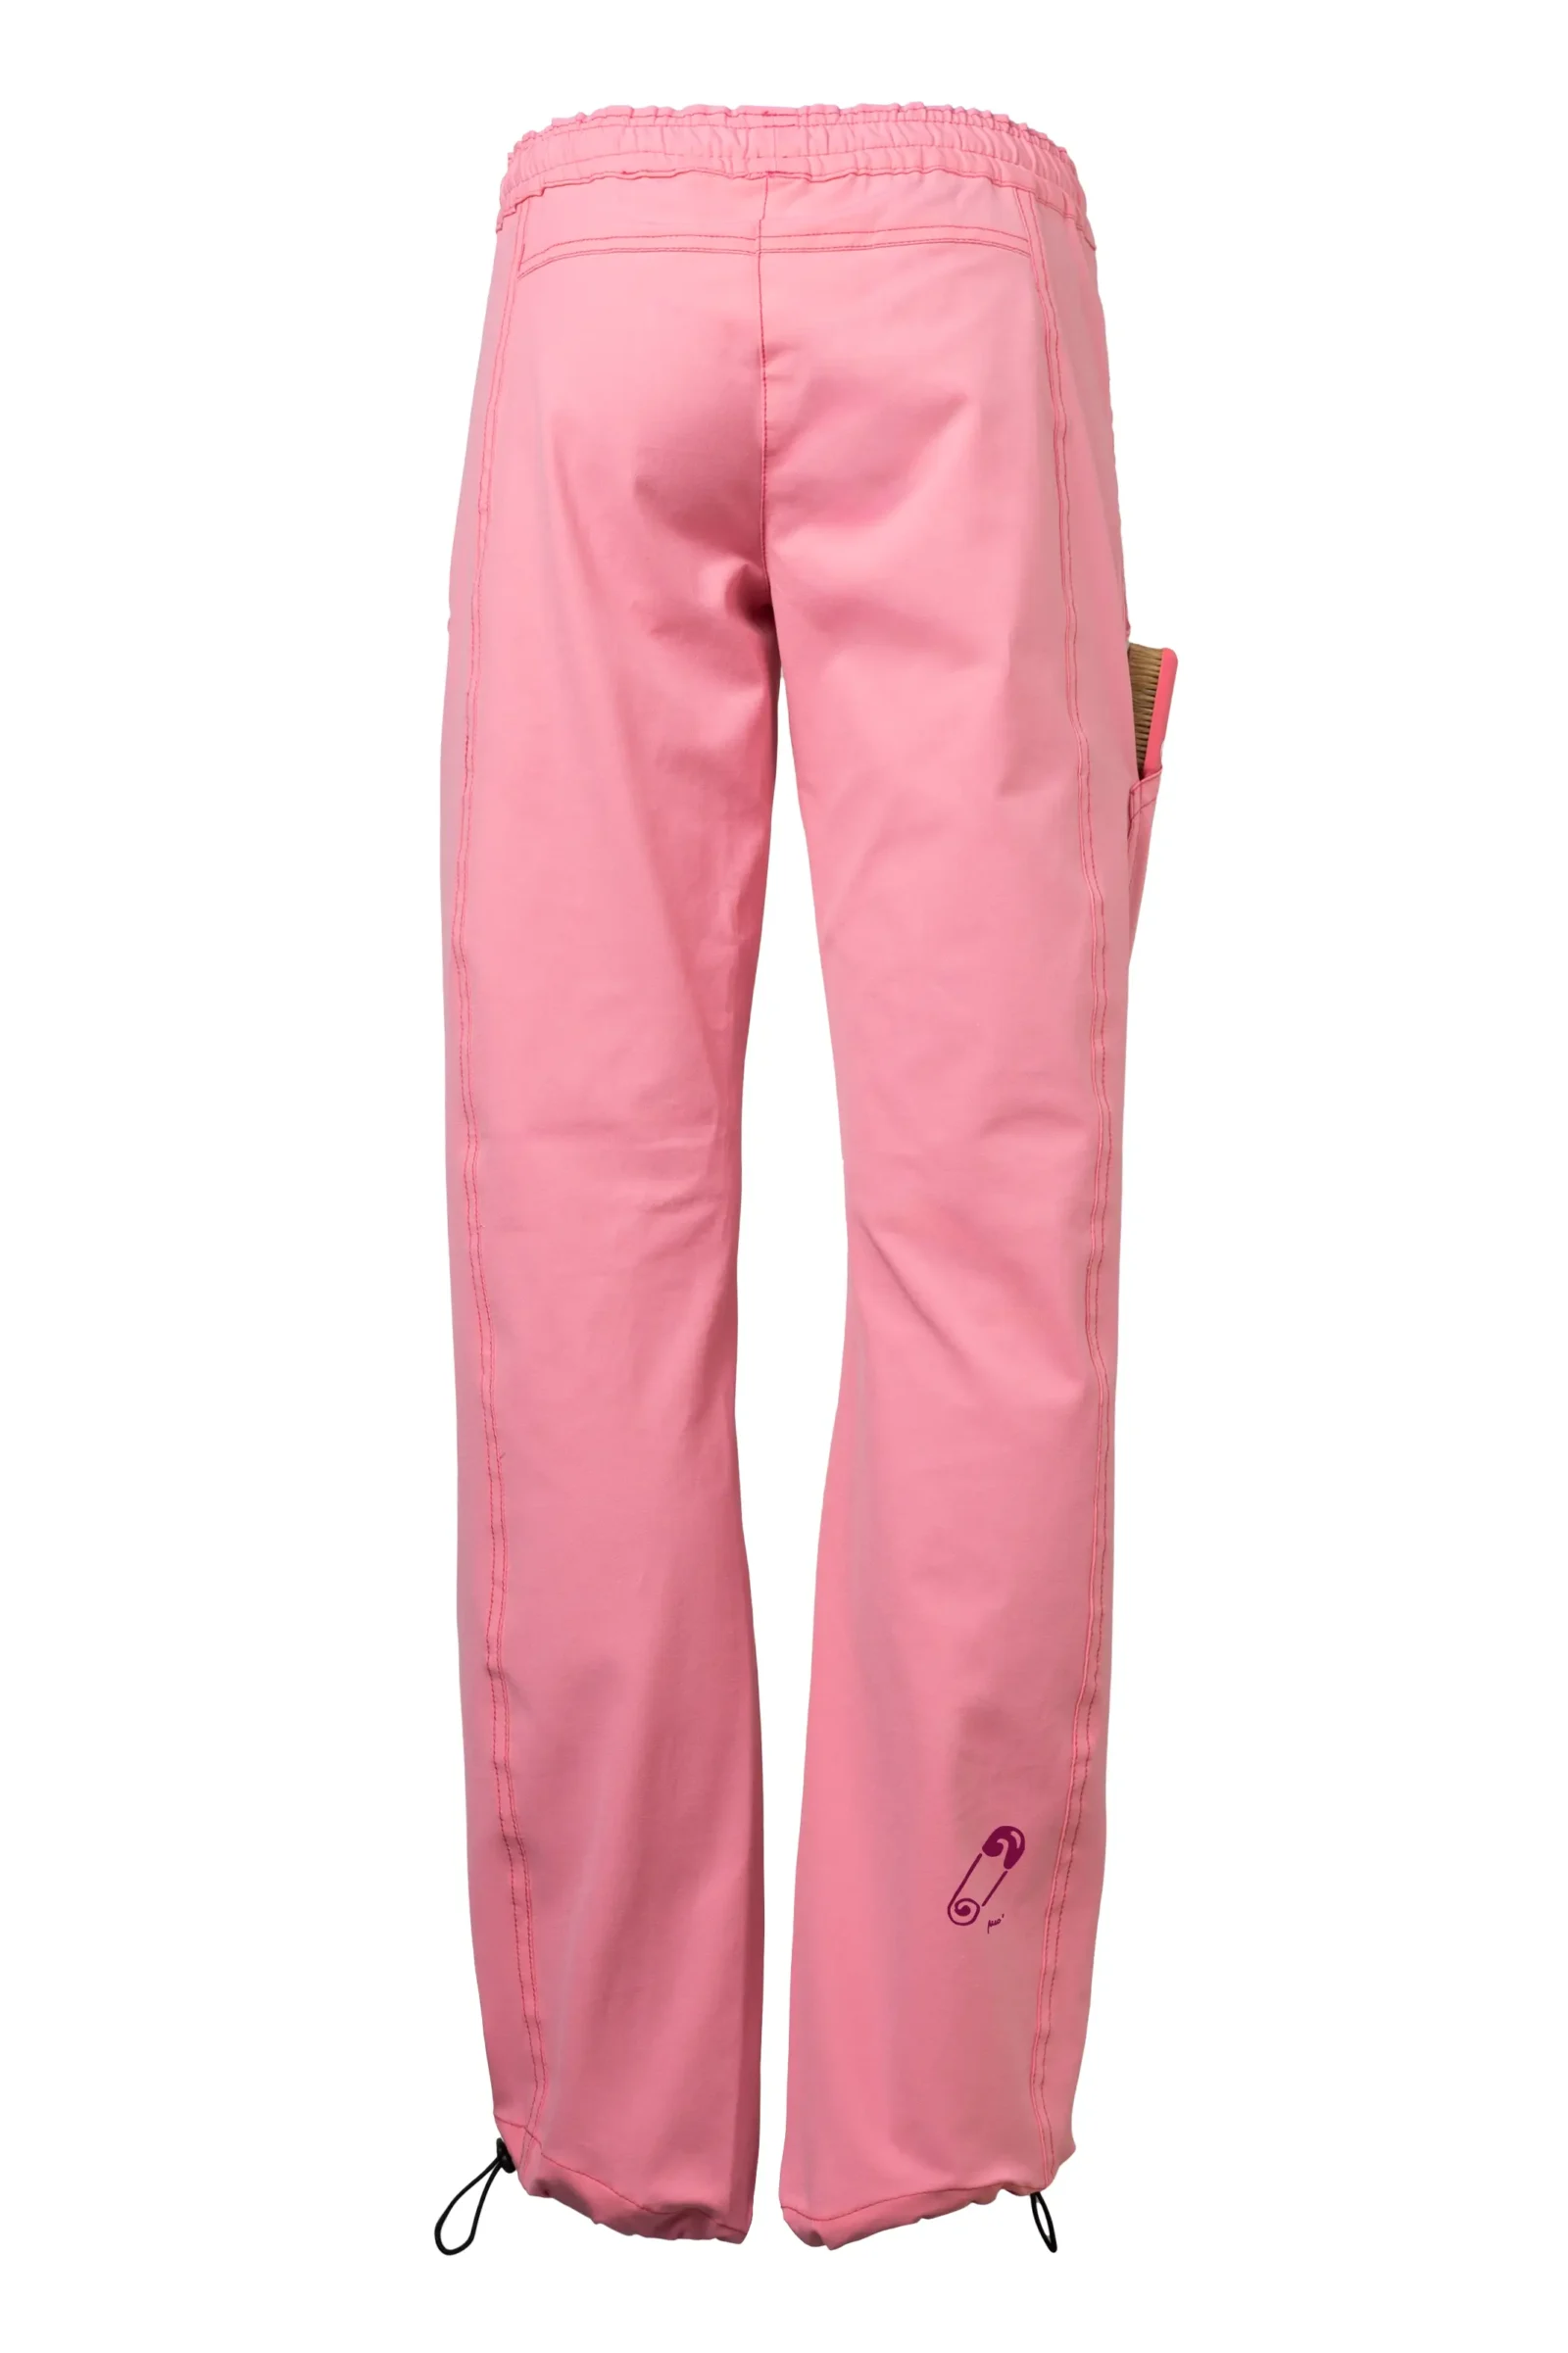 women's sport climbing pants - fluo pink - stretch cotton - pin graphics - VIOLET MONVIC